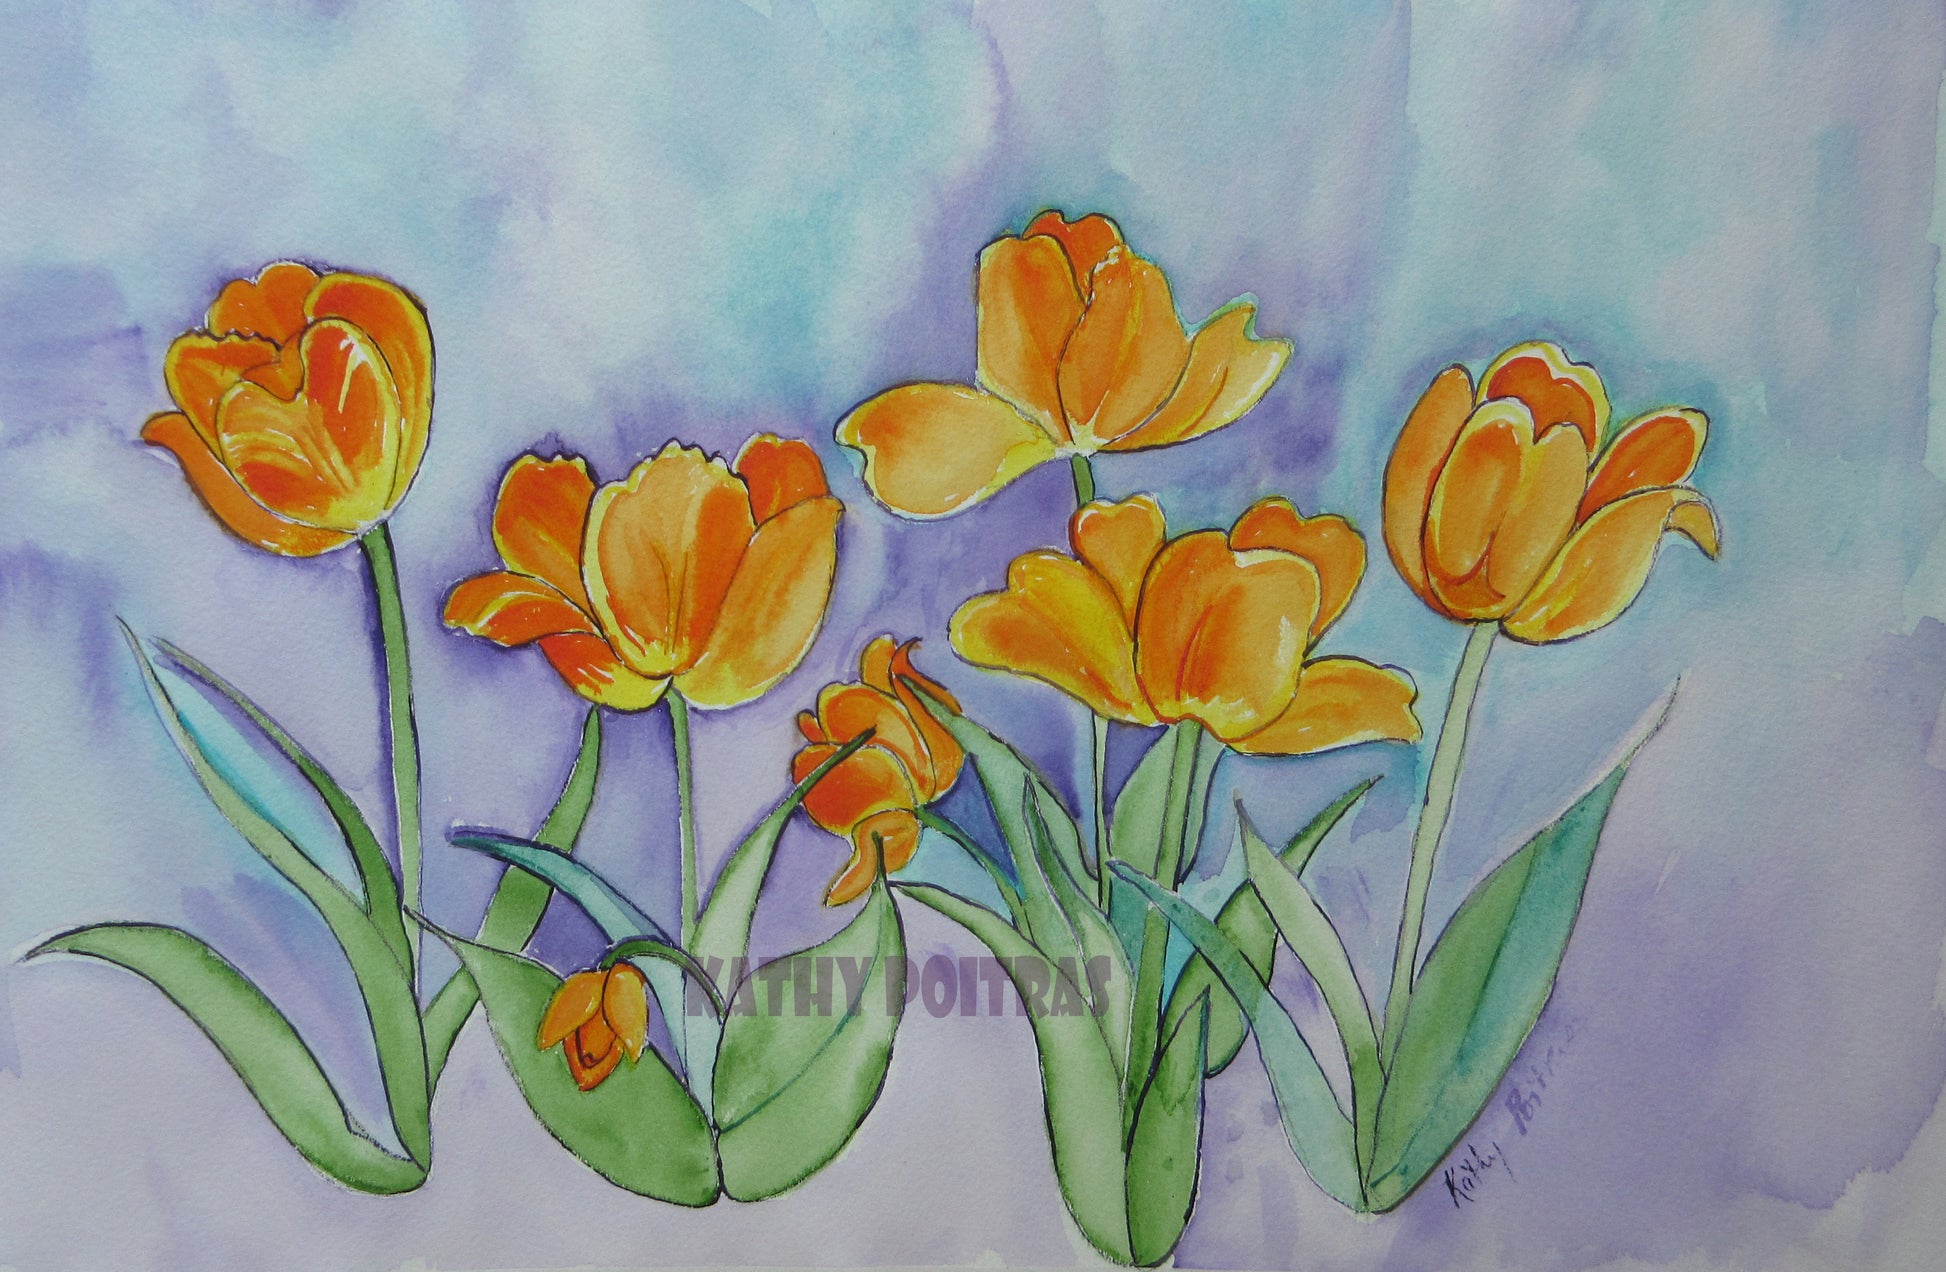 6 expressive watercolor orange tulips dance on a bluish purple wash background. By artist Kathy Poitras